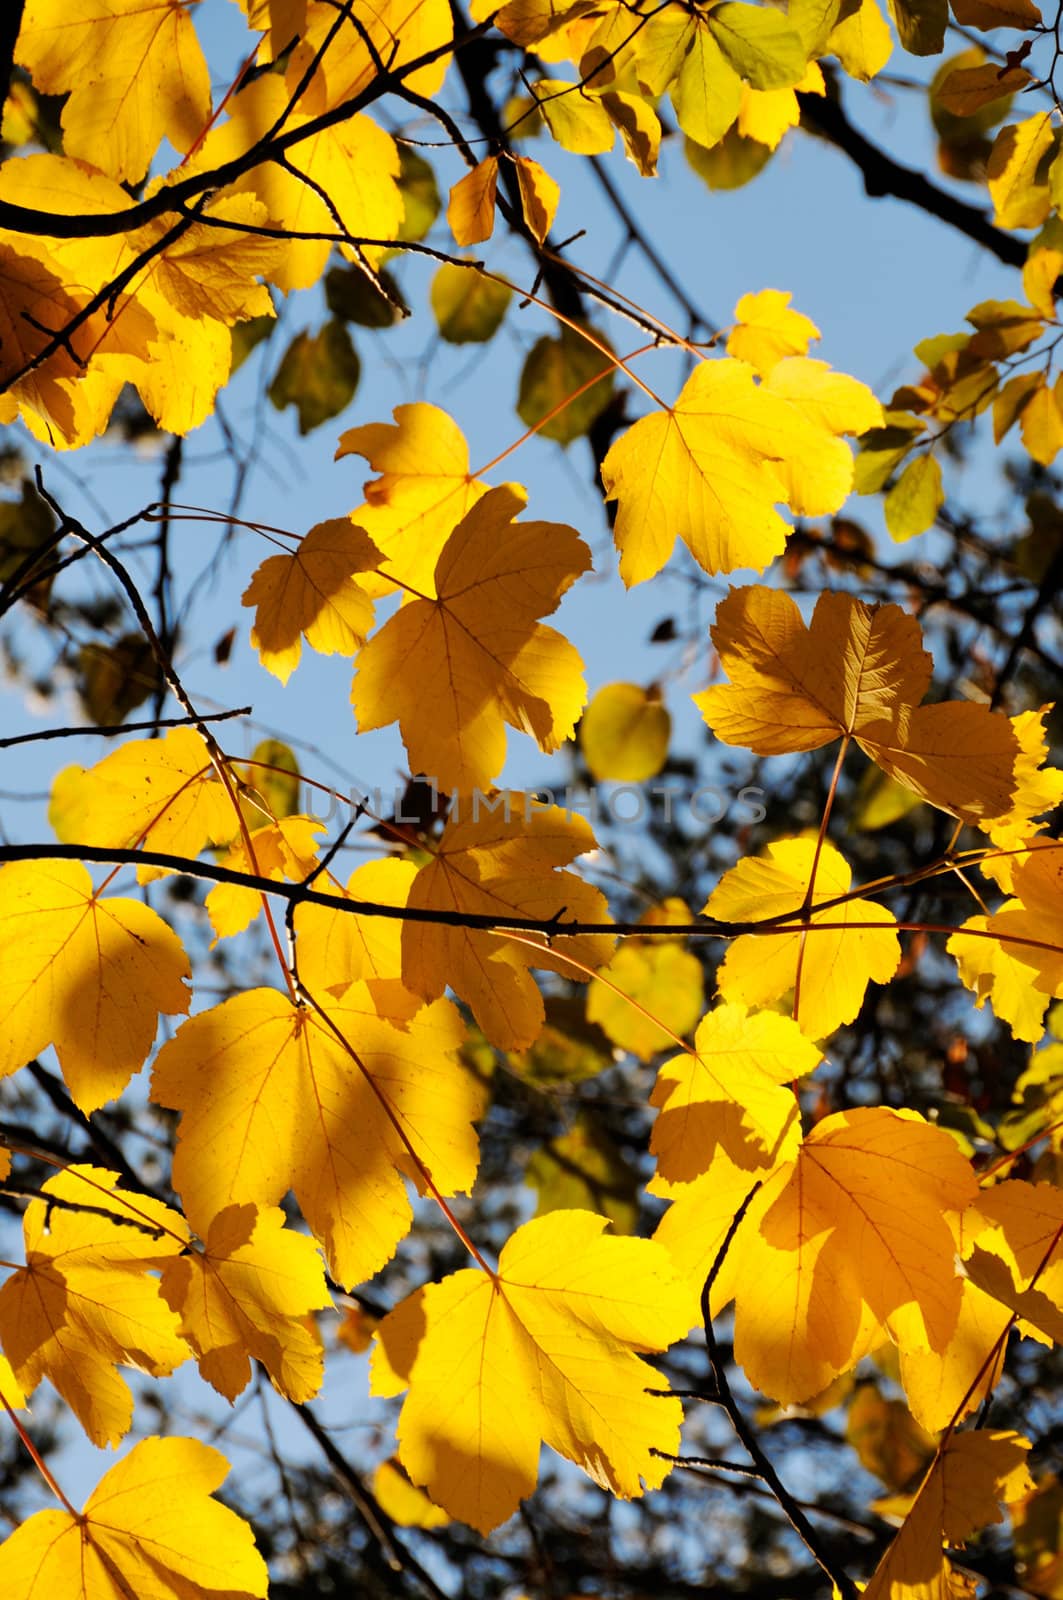 Autumn leaves under a sunny blue sky